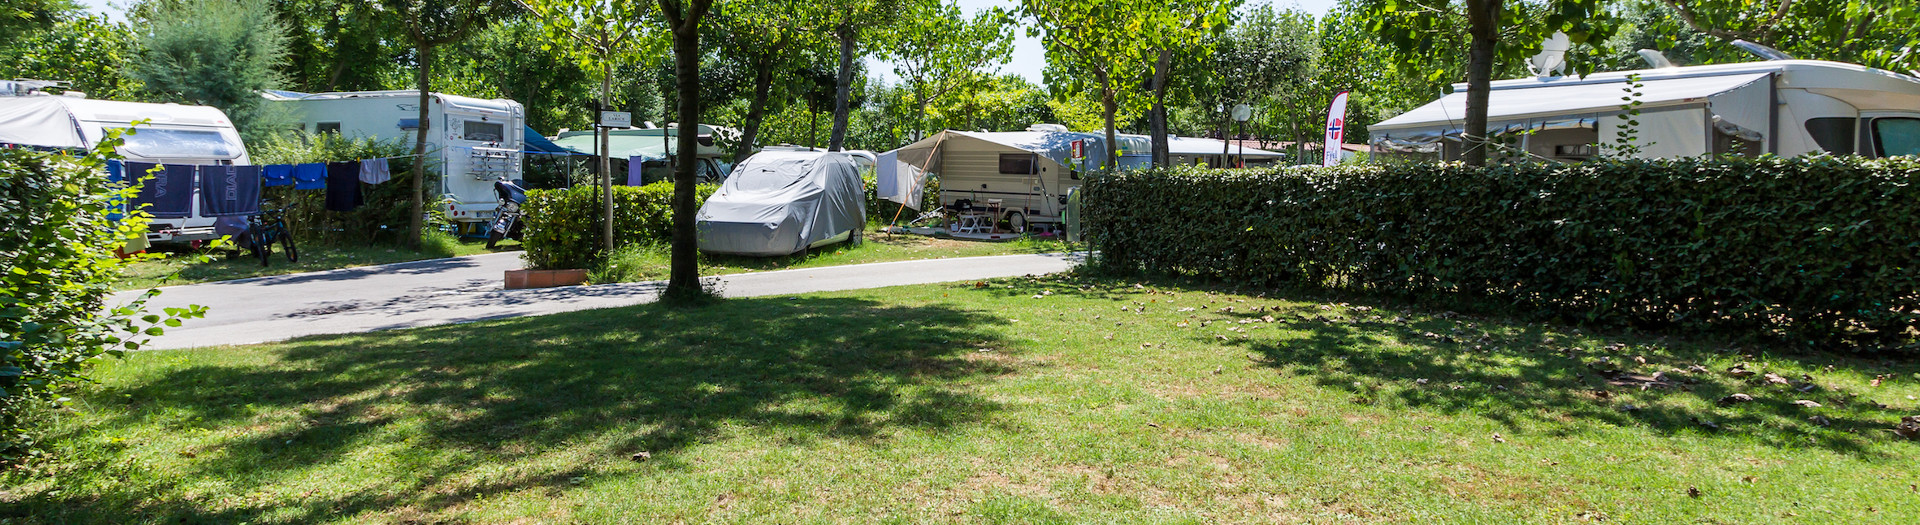 Piazzola-campeggio-camper-media-Camping-Rubicone